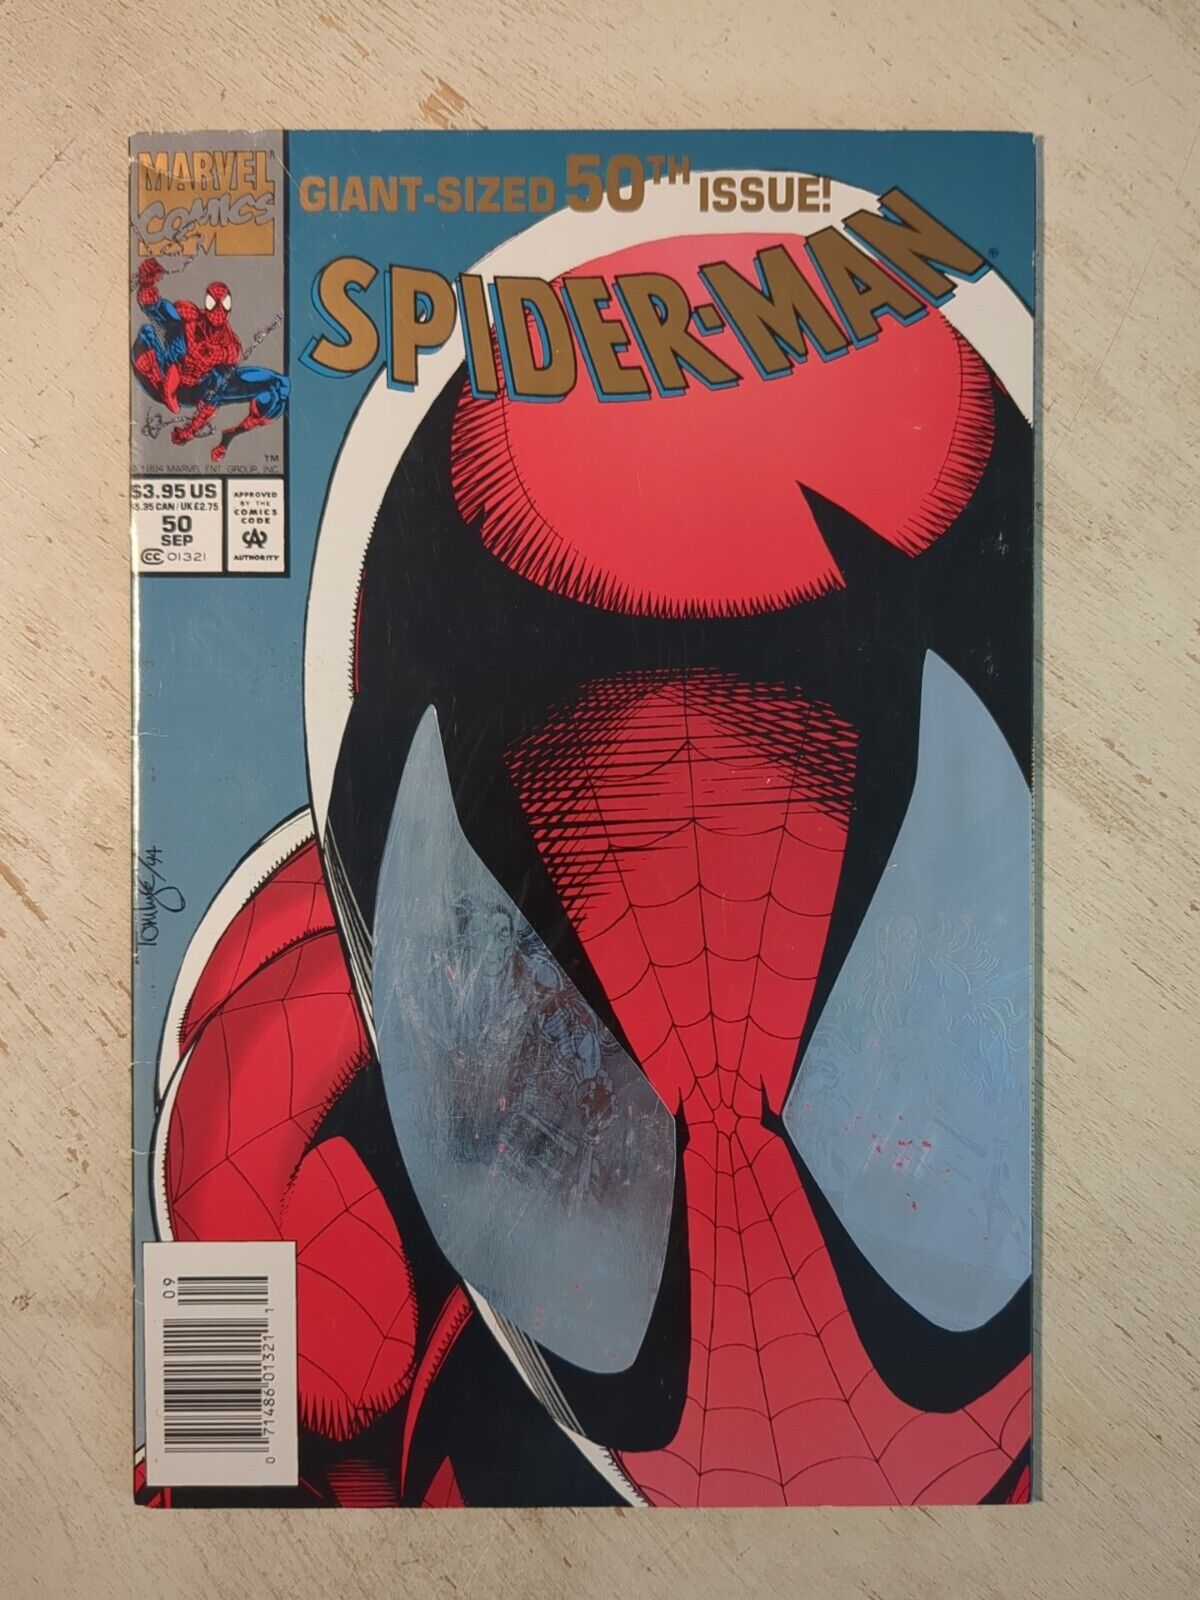 Spider-Man #50 (Marvel 1994) Giant Size Hologram Cover  SHIPS FREE